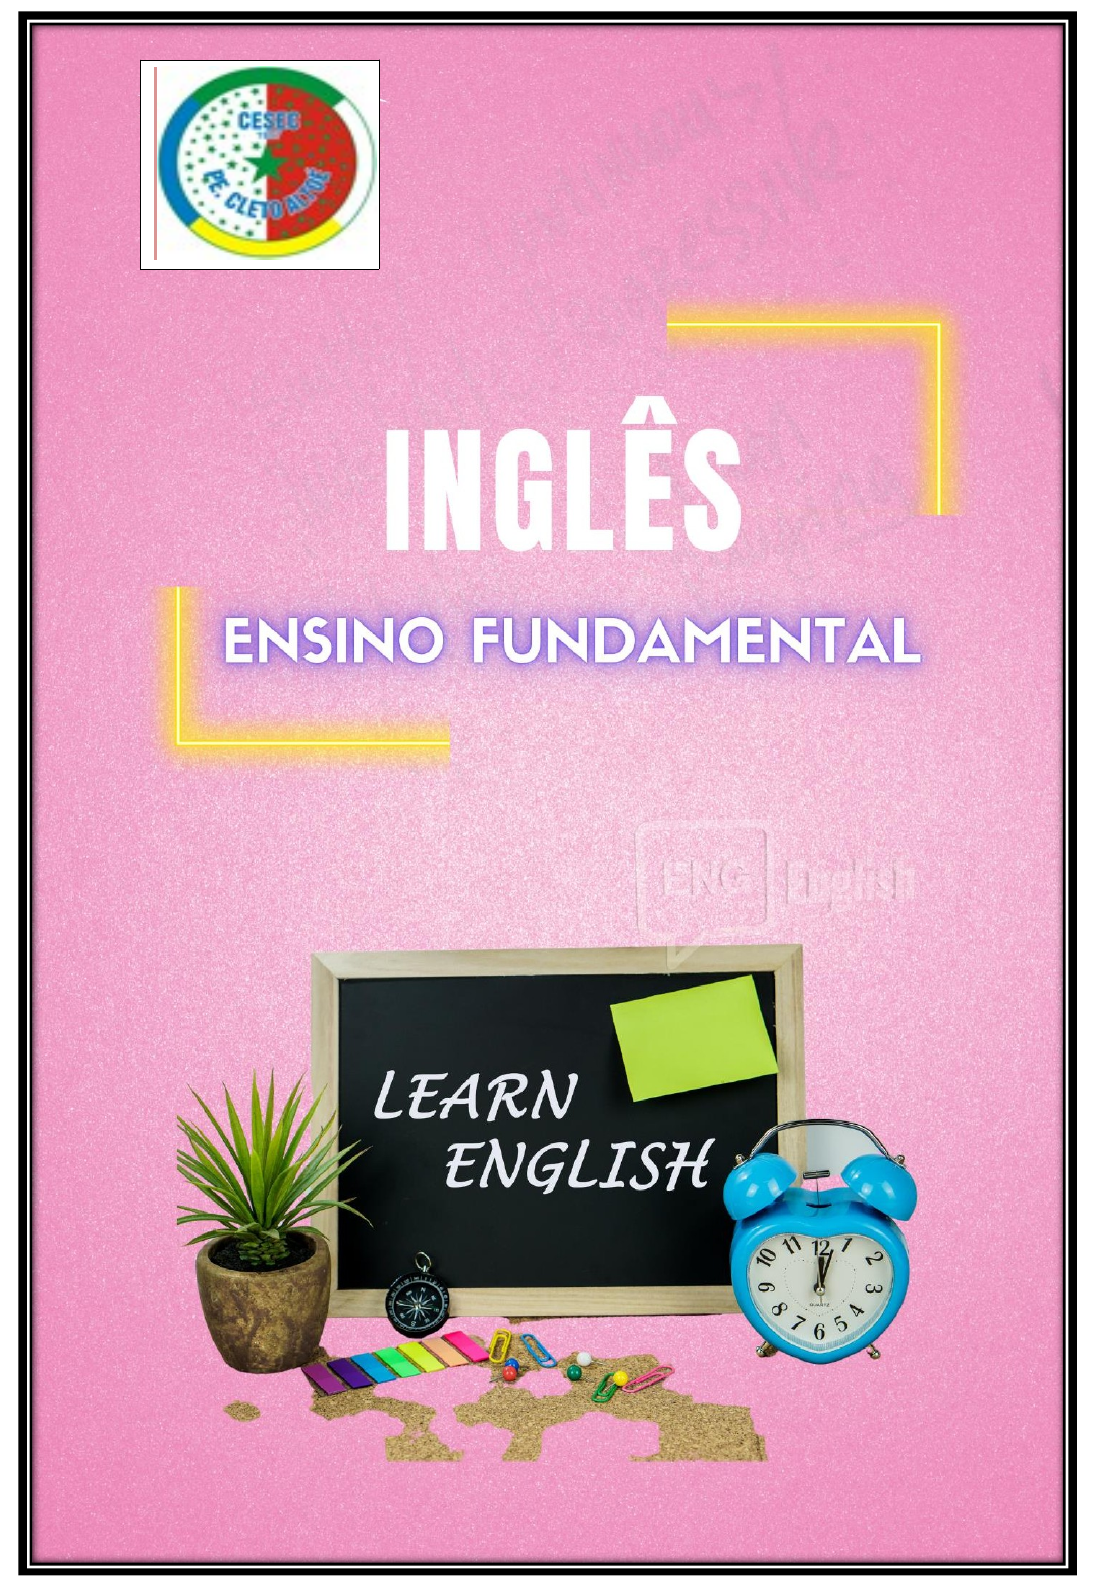 wonder — Aulas Inglês Essencial — INGLÊS ESSENCIAL 2.0